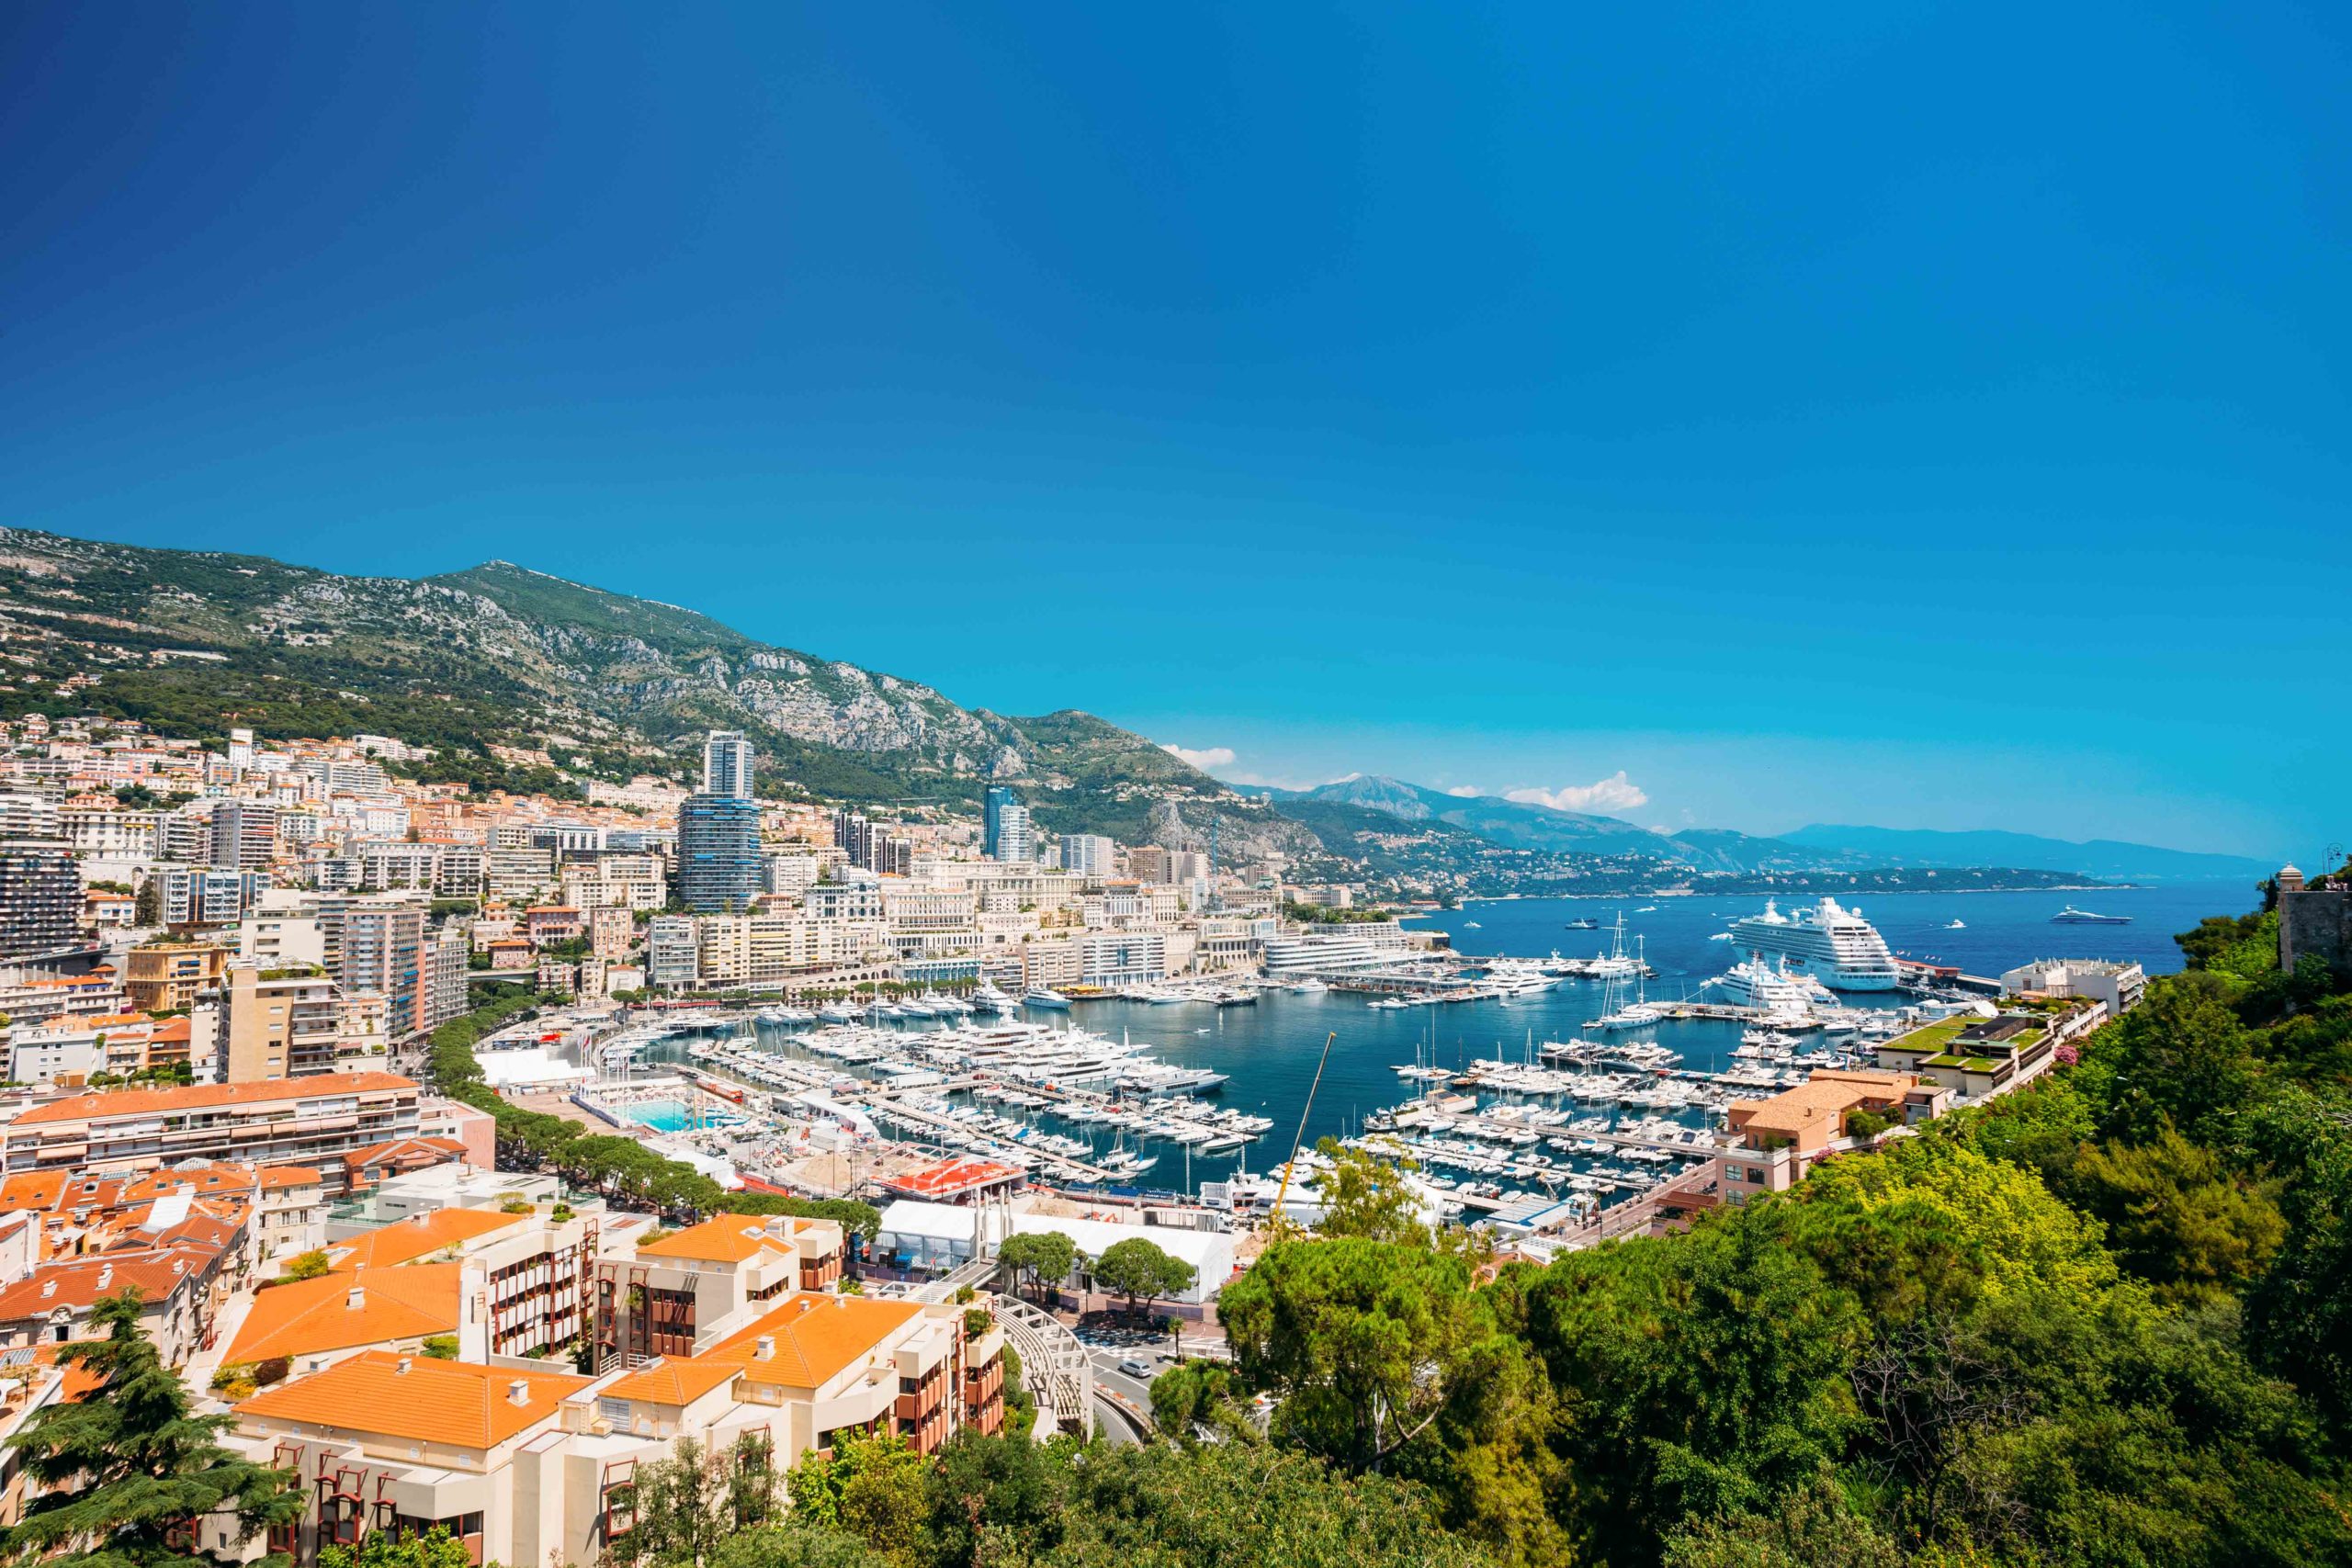 The Principality of Monaco. Photo: Grigory_bruev via Envato Elements